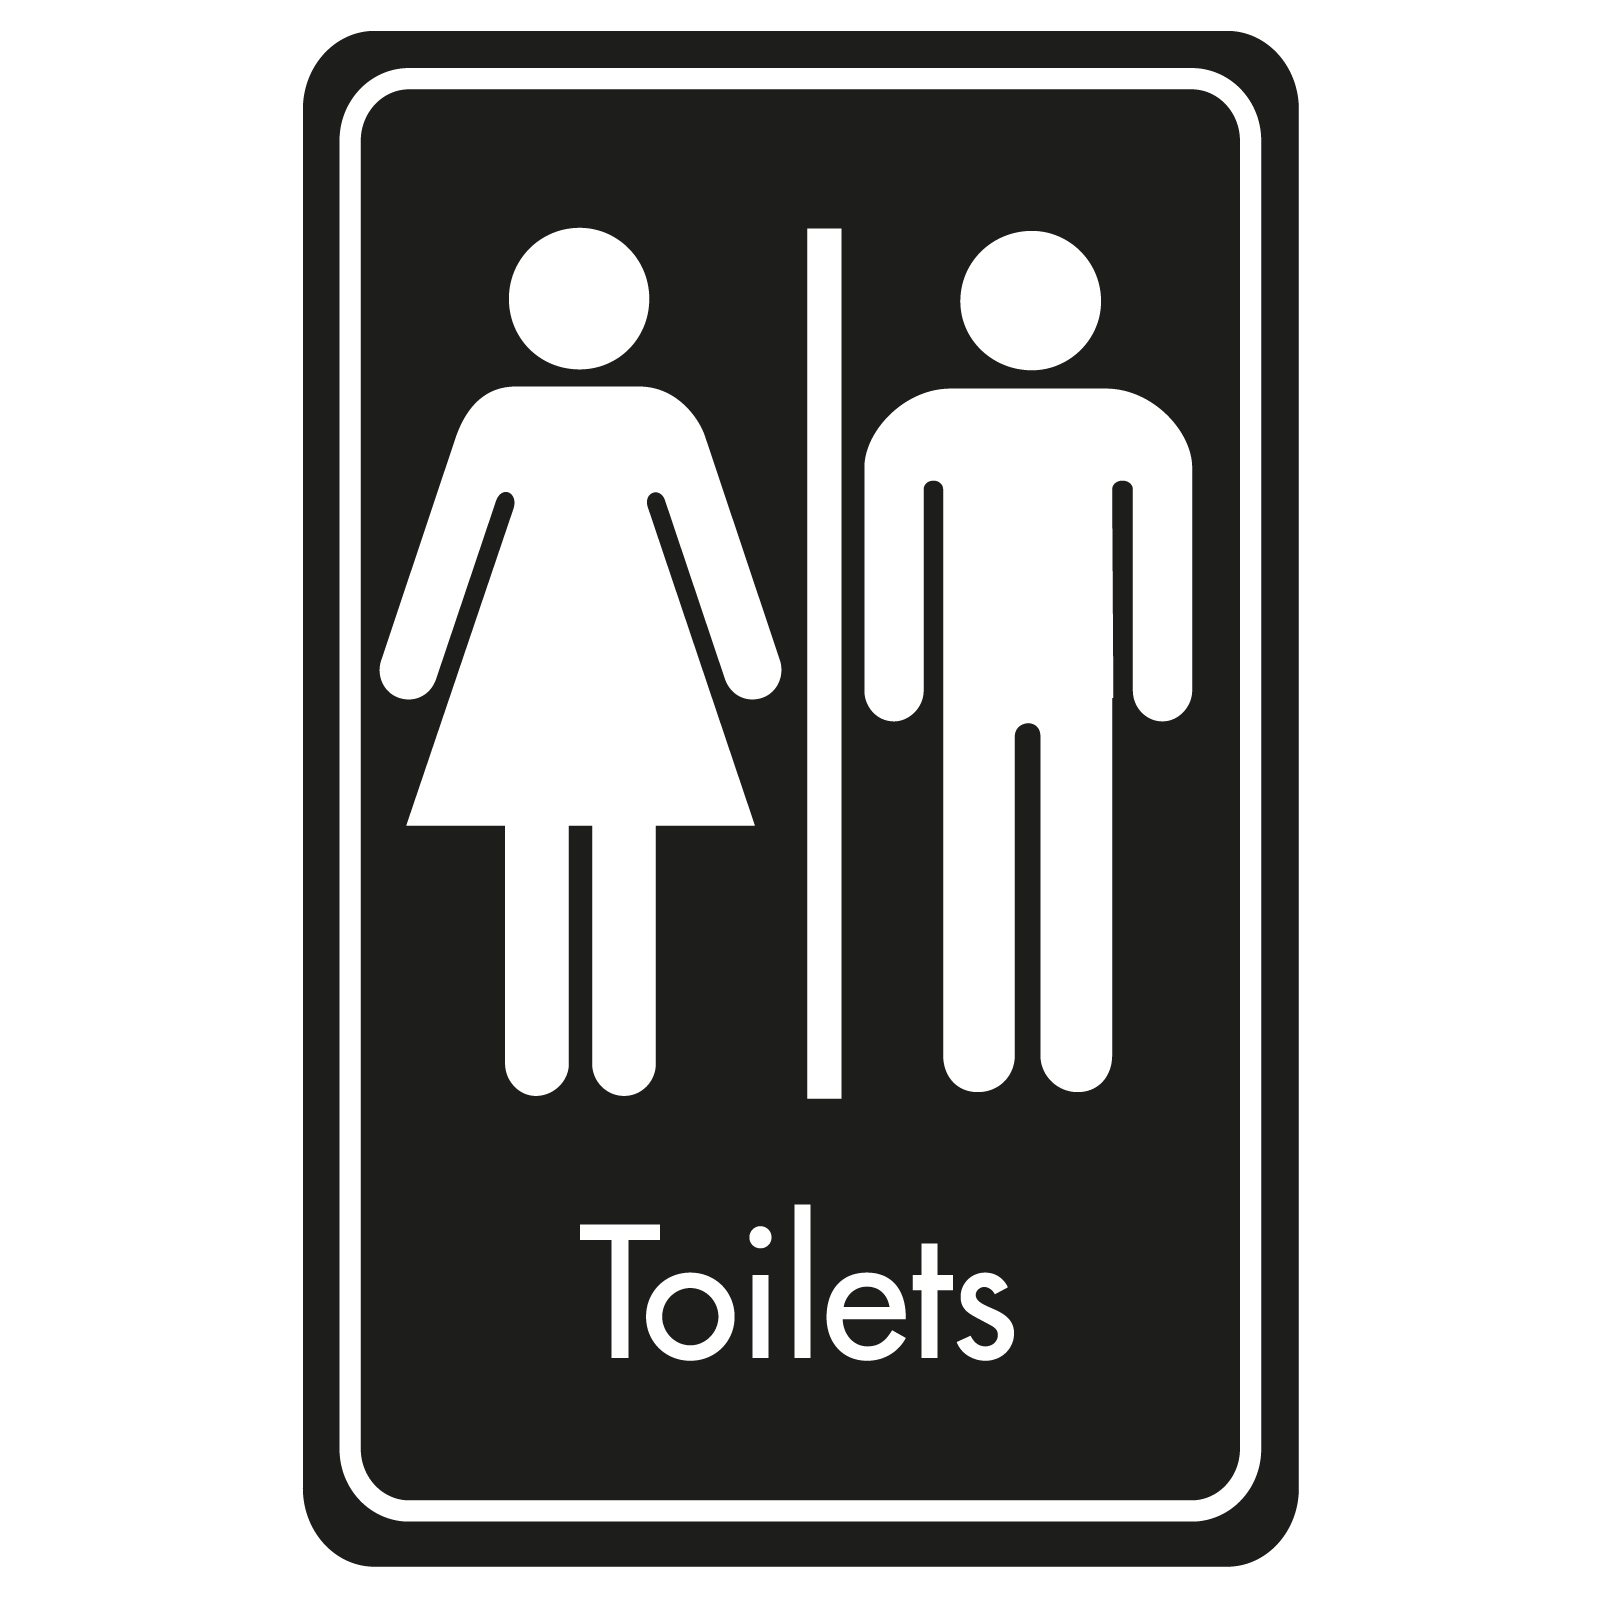 Large Toilets Door Sign - White on Black